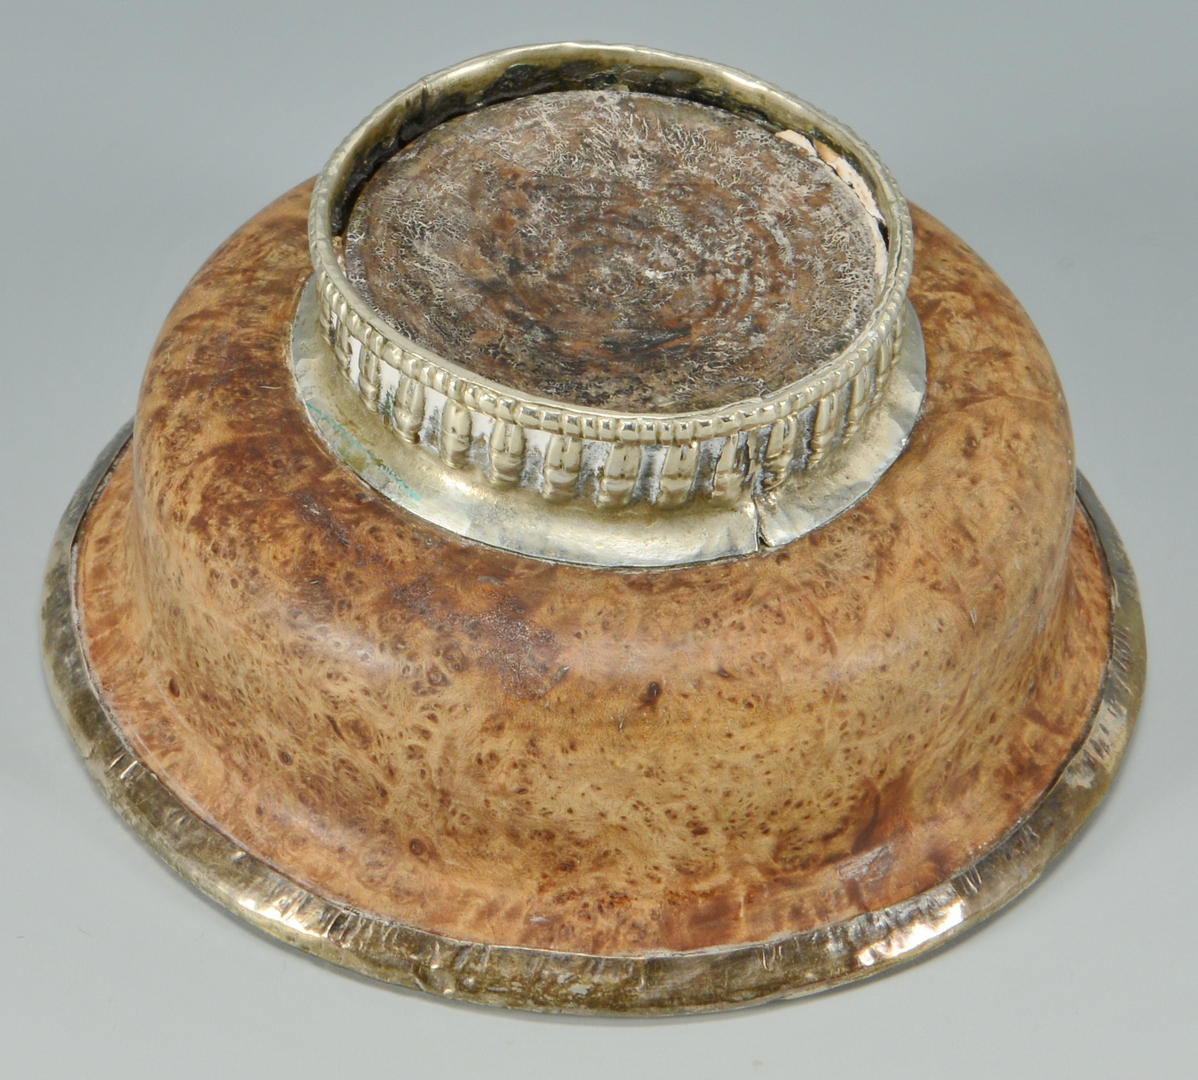 Lot 3088193: Silver mounted burled Mazer Bowl